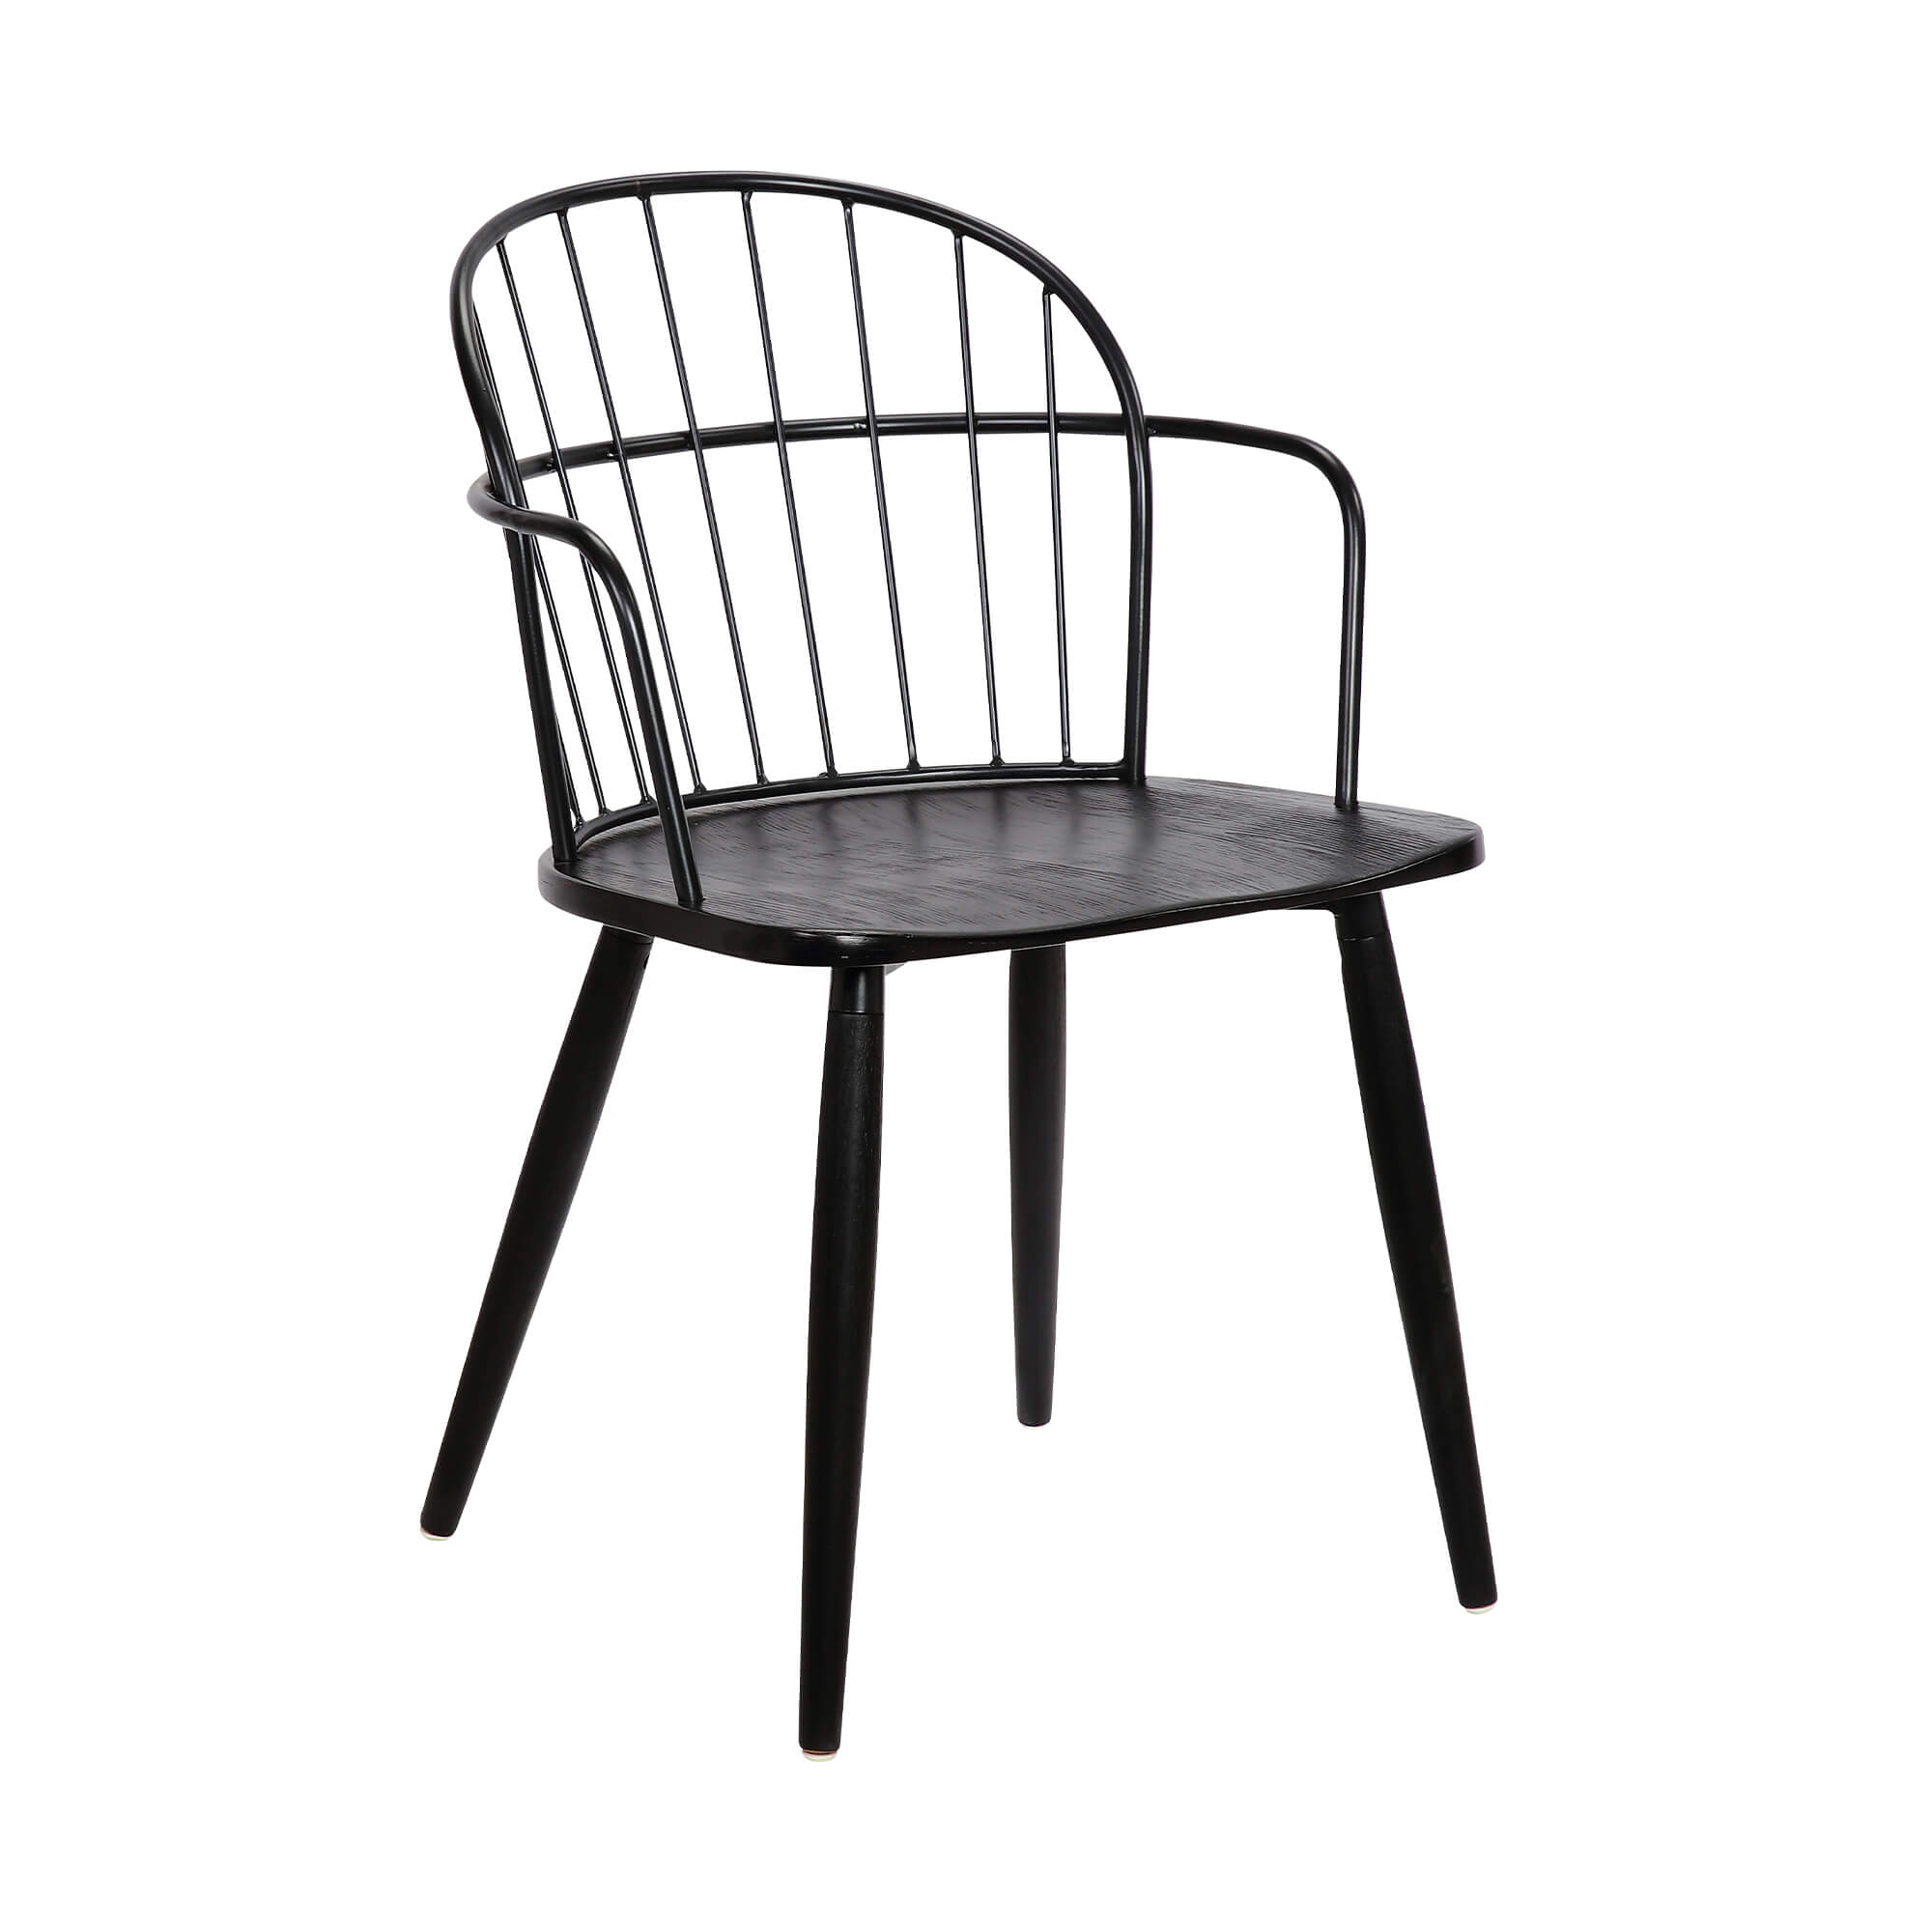 Bradley Steel Framed Side Chair in Black Powder Coated Finish and Black Brushed Wood